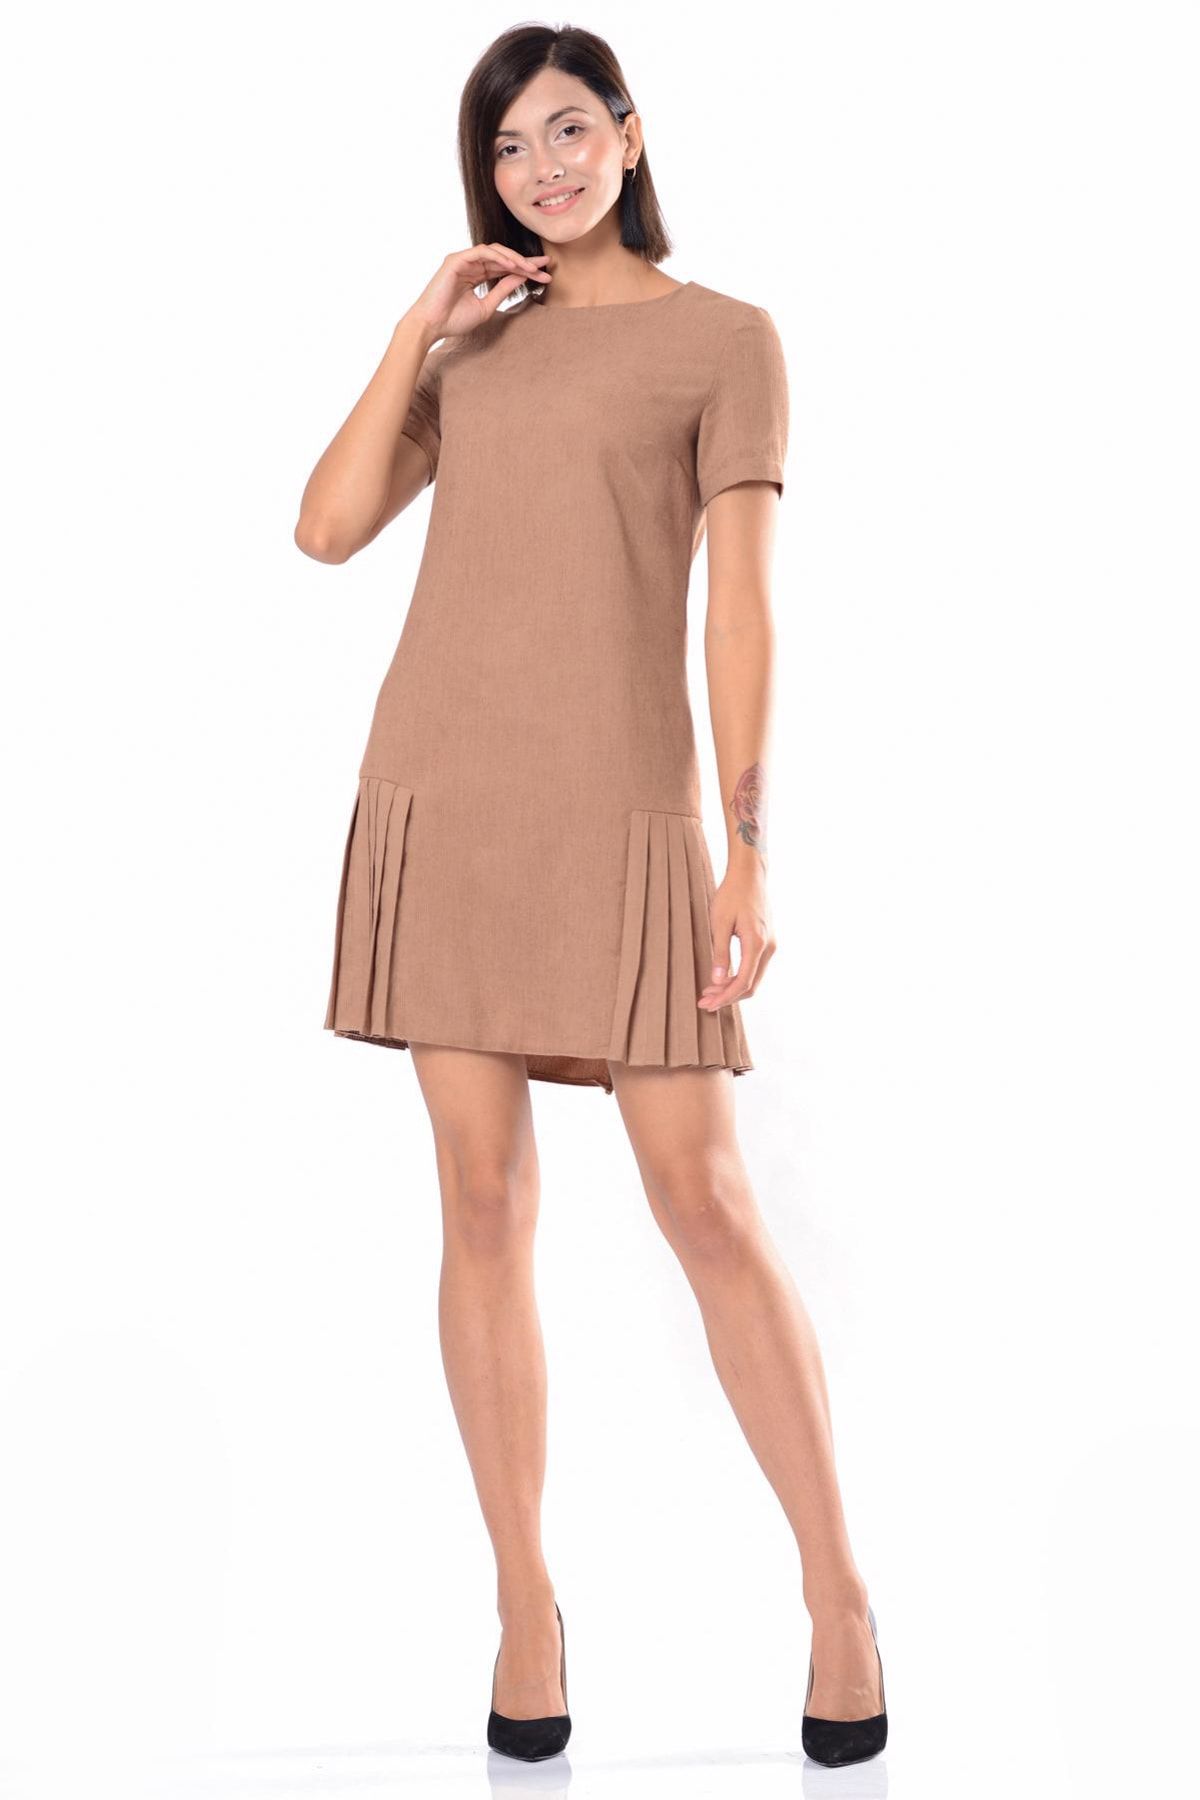 İroni Kadın Vizon Pileli Kadife Mini Elbise 5287-1313